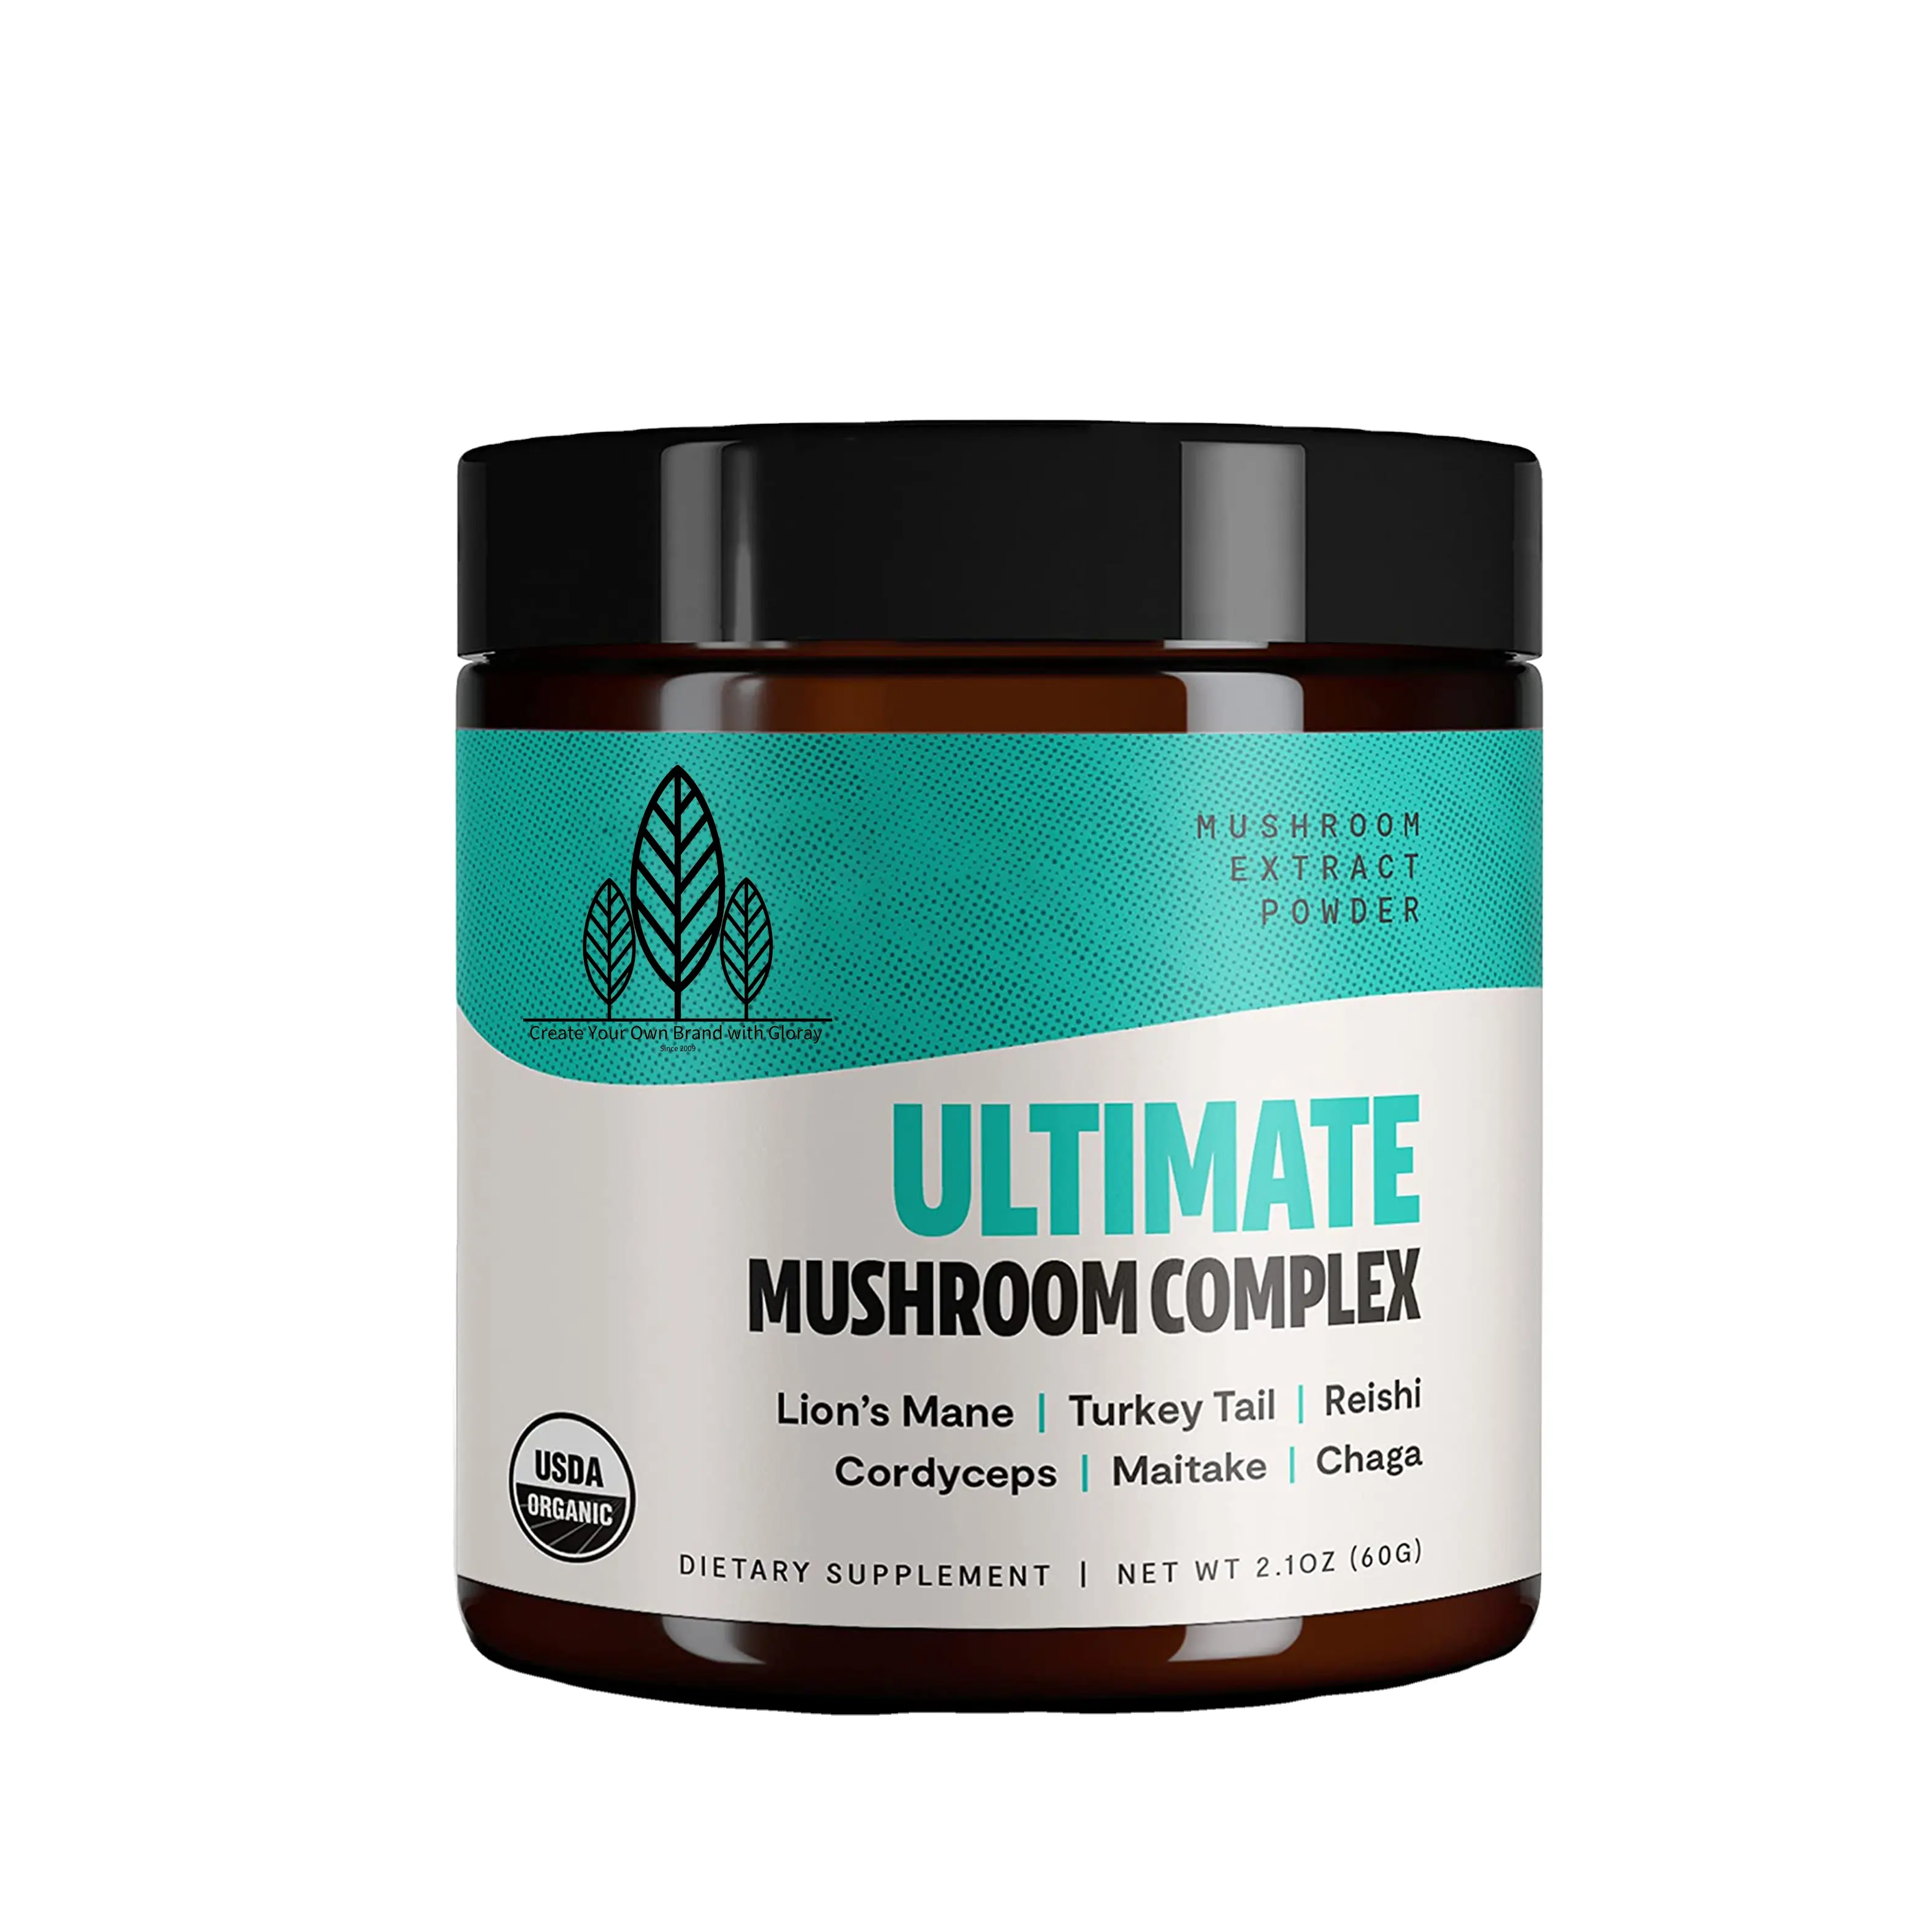 Ultimate Mushroom Complex - Pure Extract Powder - Lions Mane, Reishi, Cordyceps, Chaga, Turkey Tail, Maitake -60g- Supplement